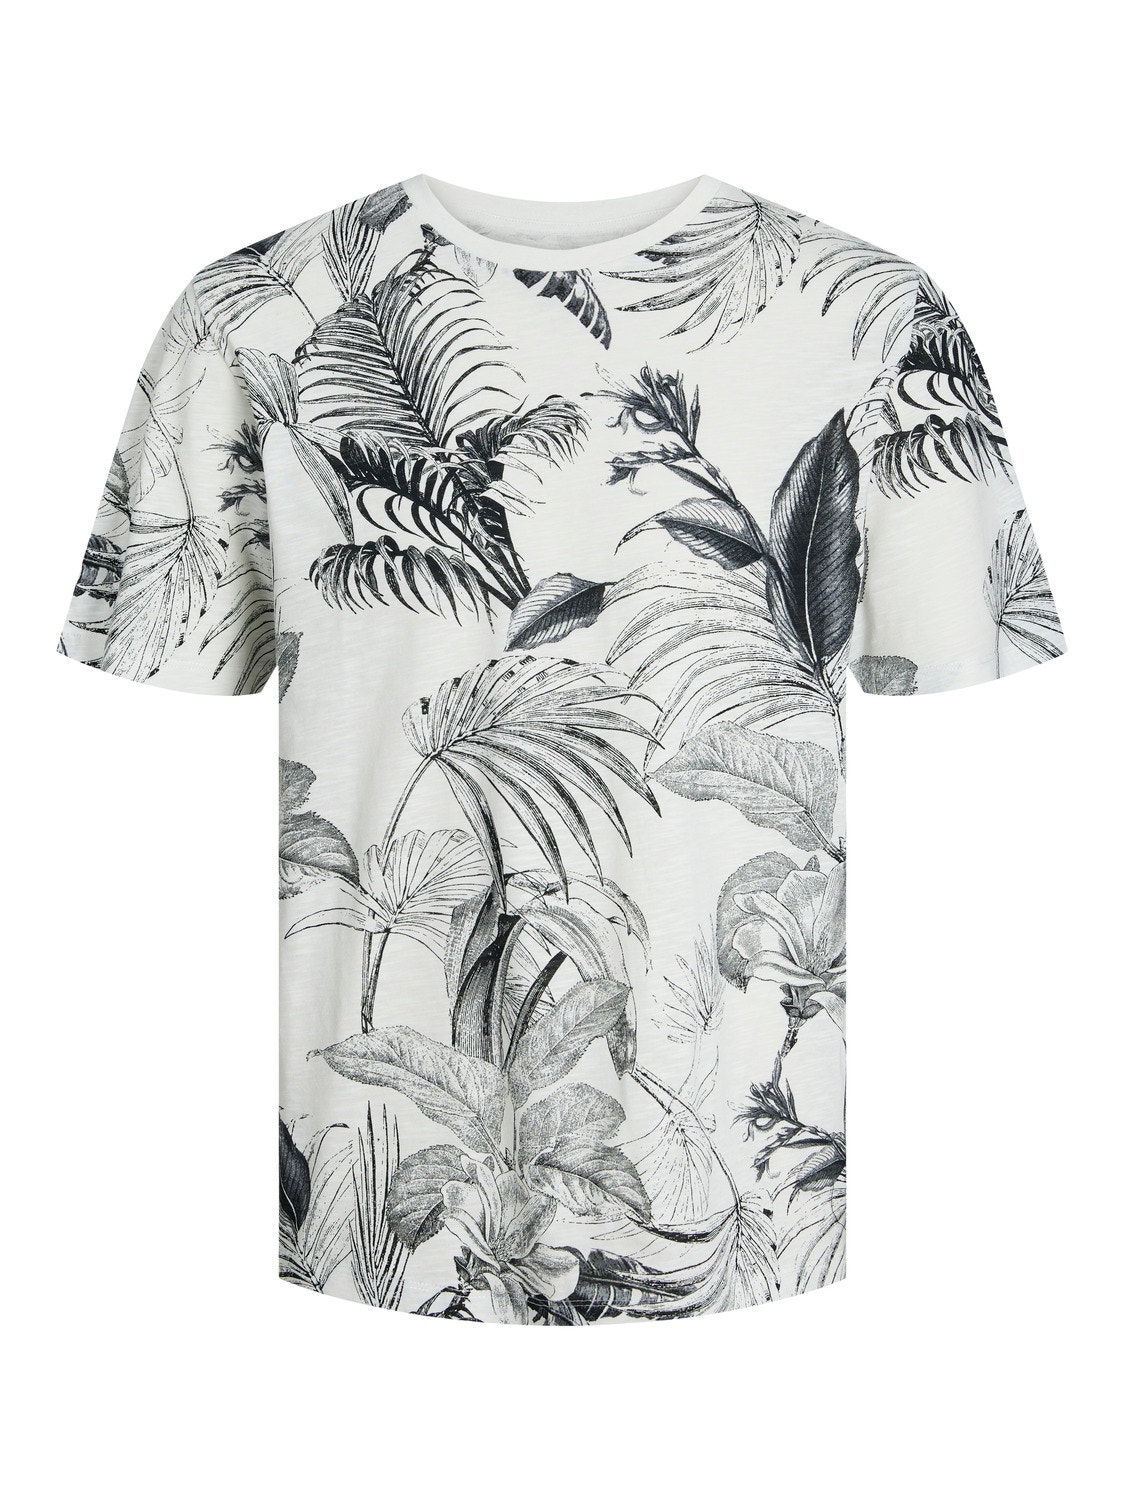 Jack & Jones T-shirt Estampado total Decote Redondo -Cloud Dancer - 12249188